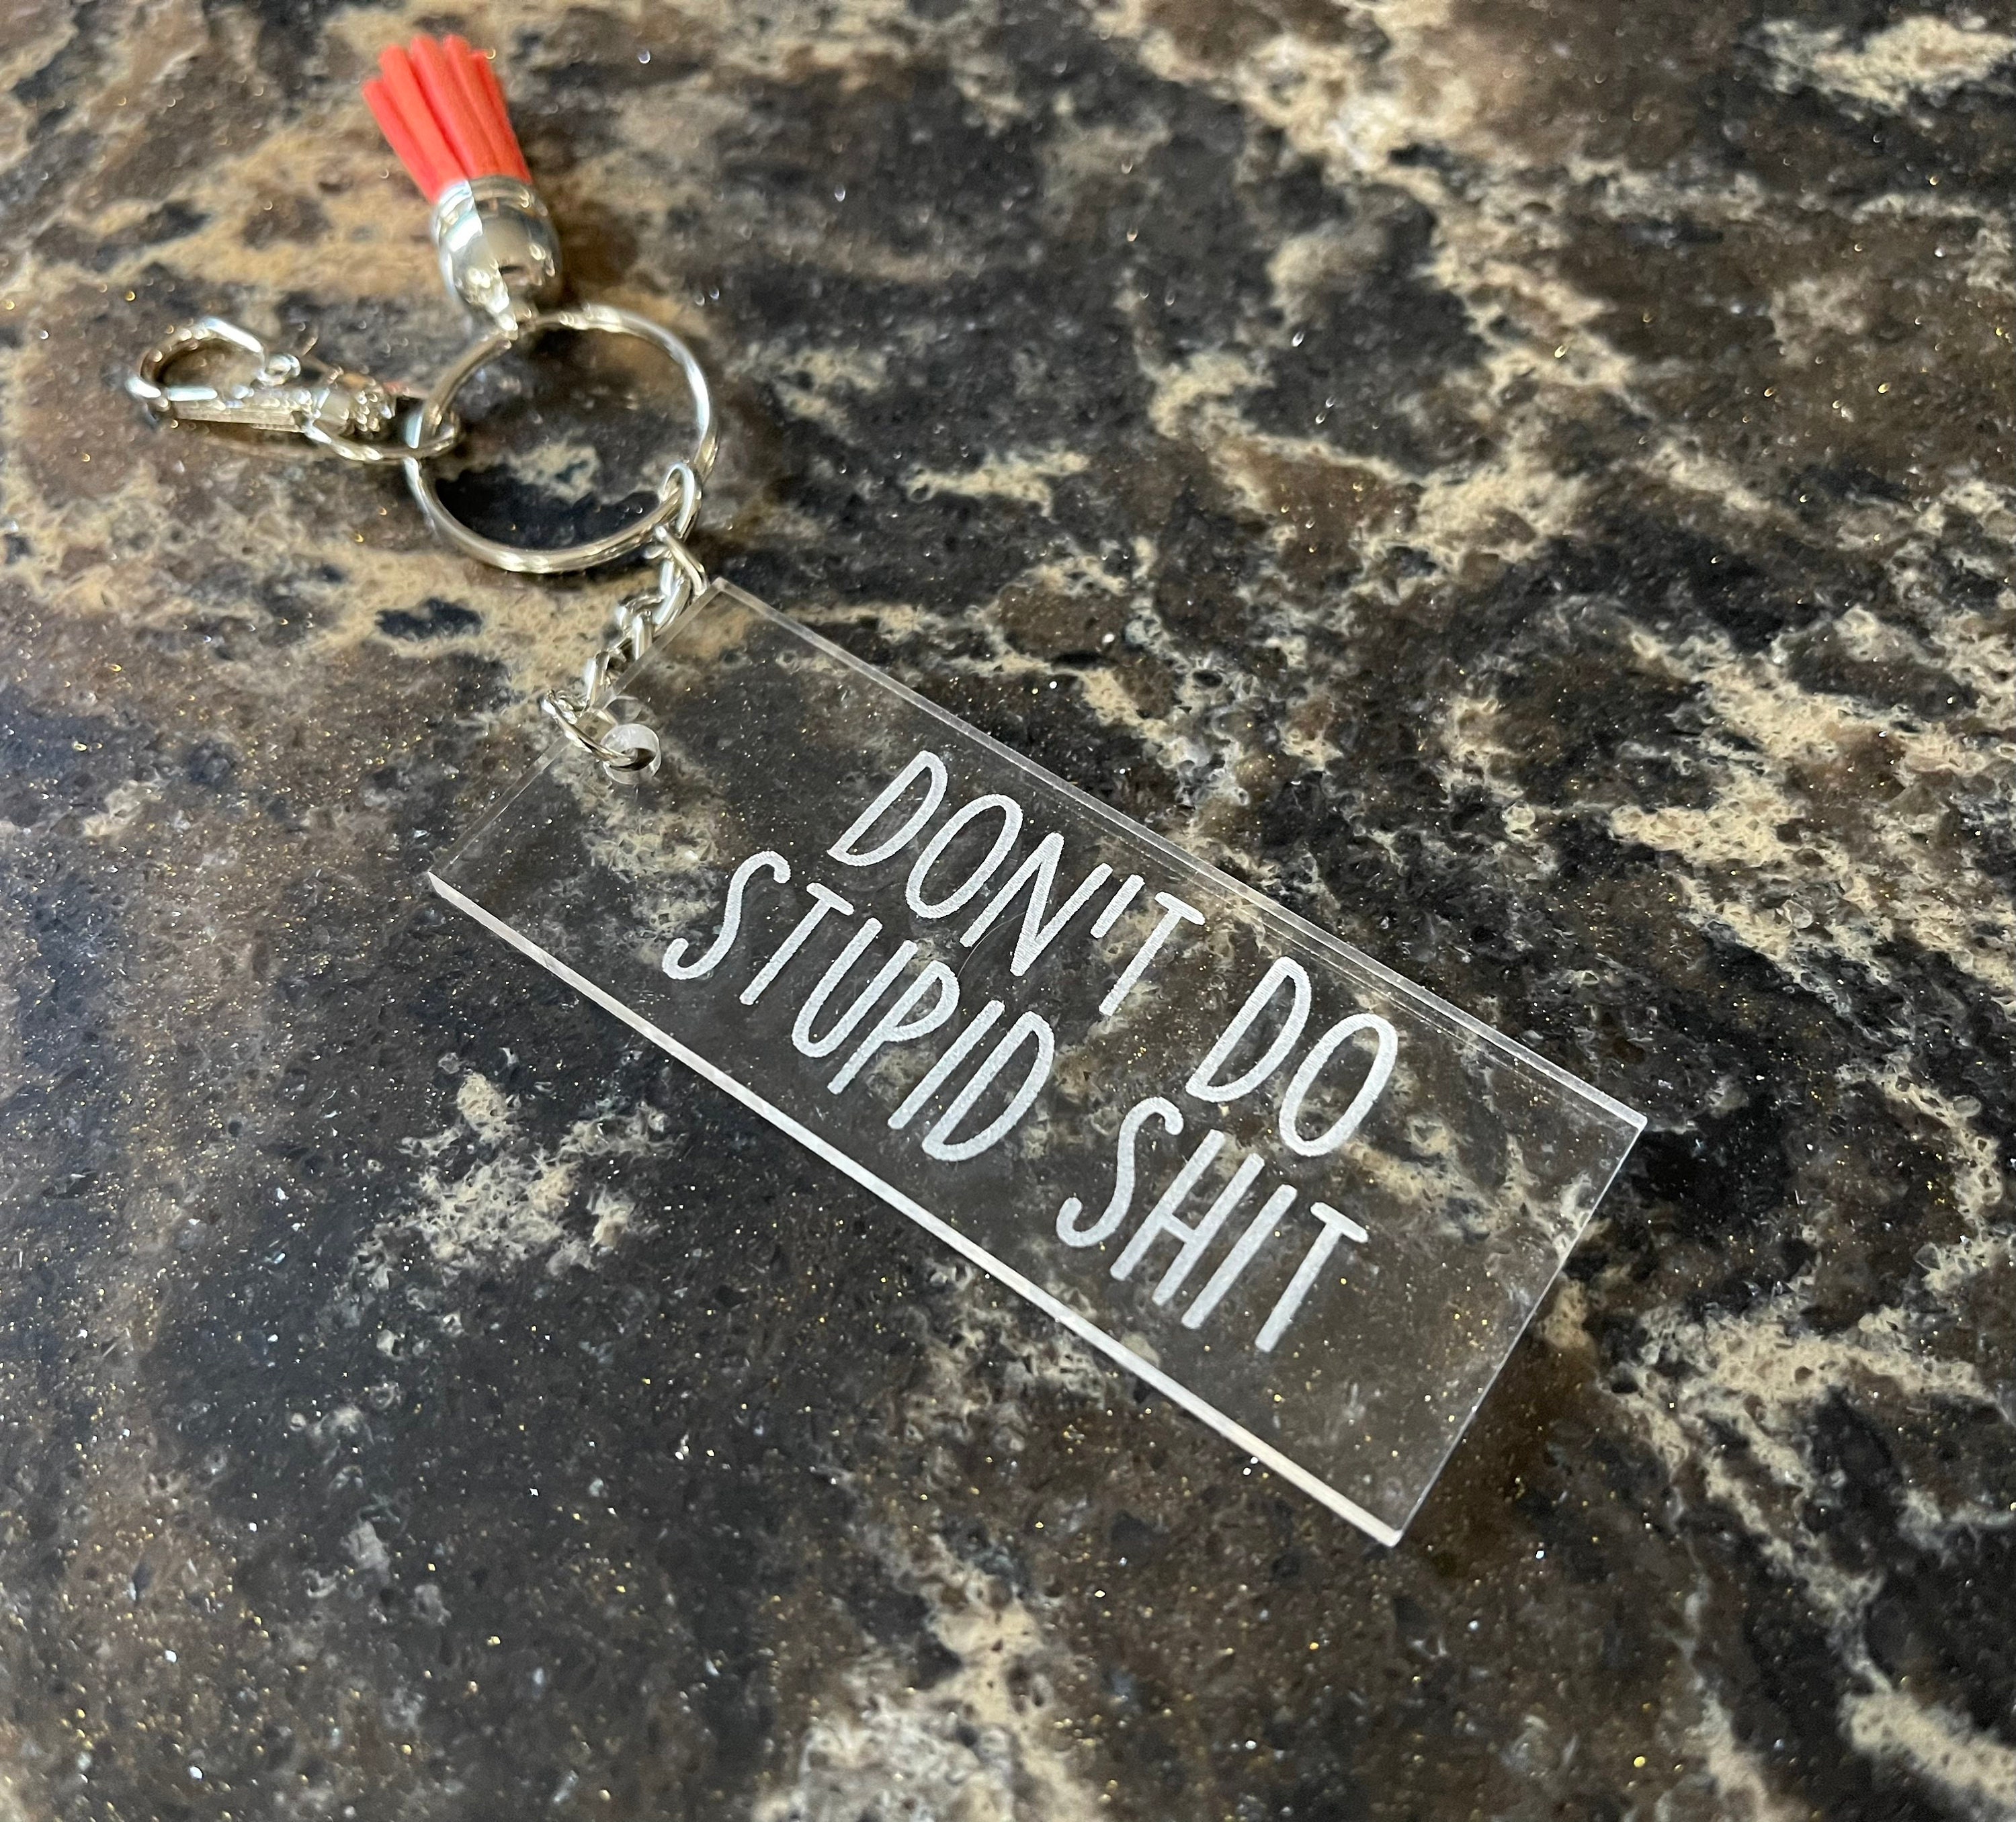 Don't Do Stupid Shit Keychain - Laser Engraved Key Fob - Wood